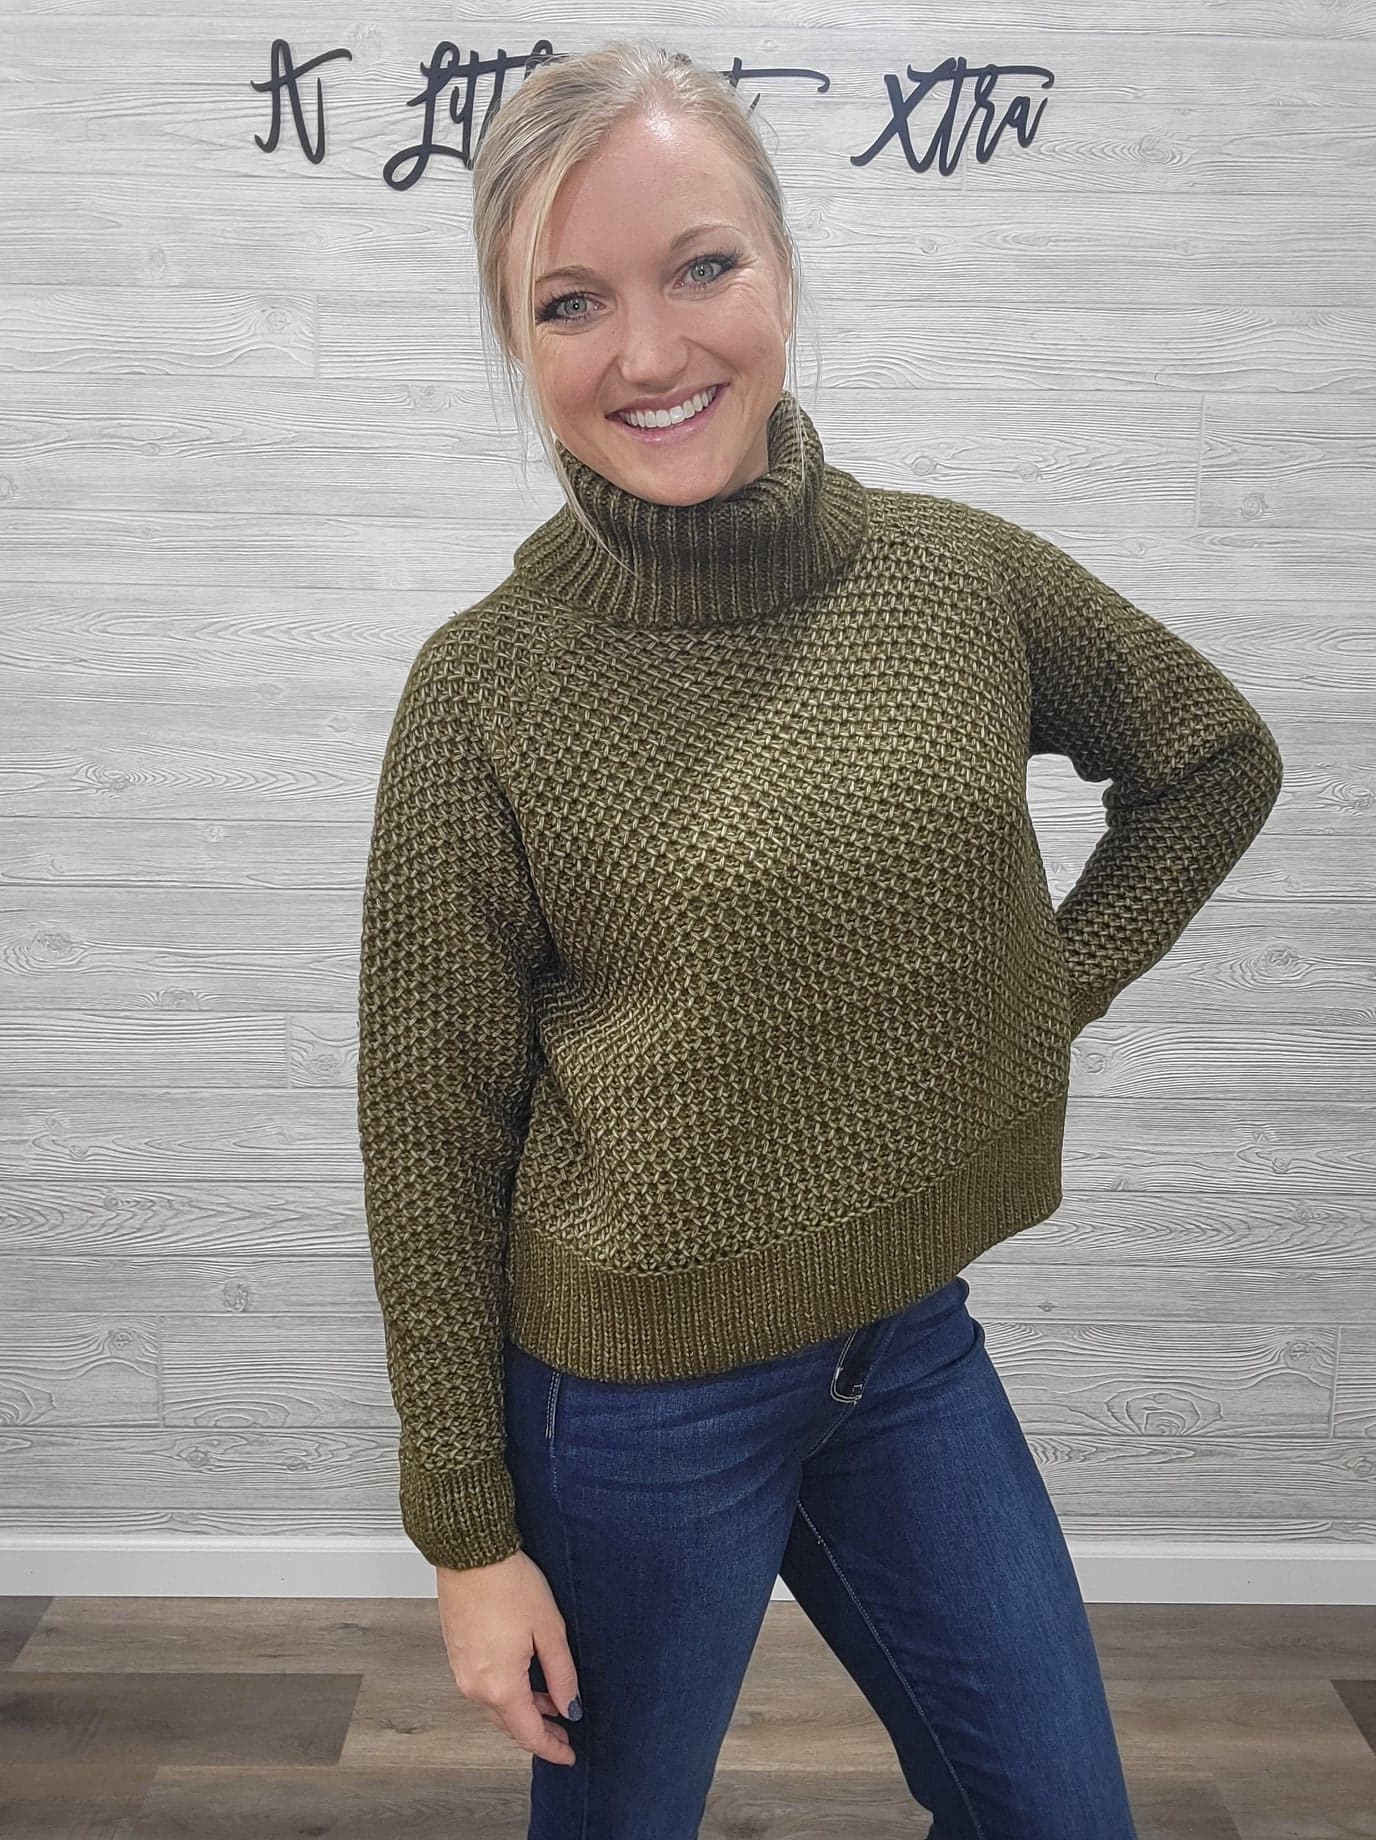 Olive Turtleneck Sweater